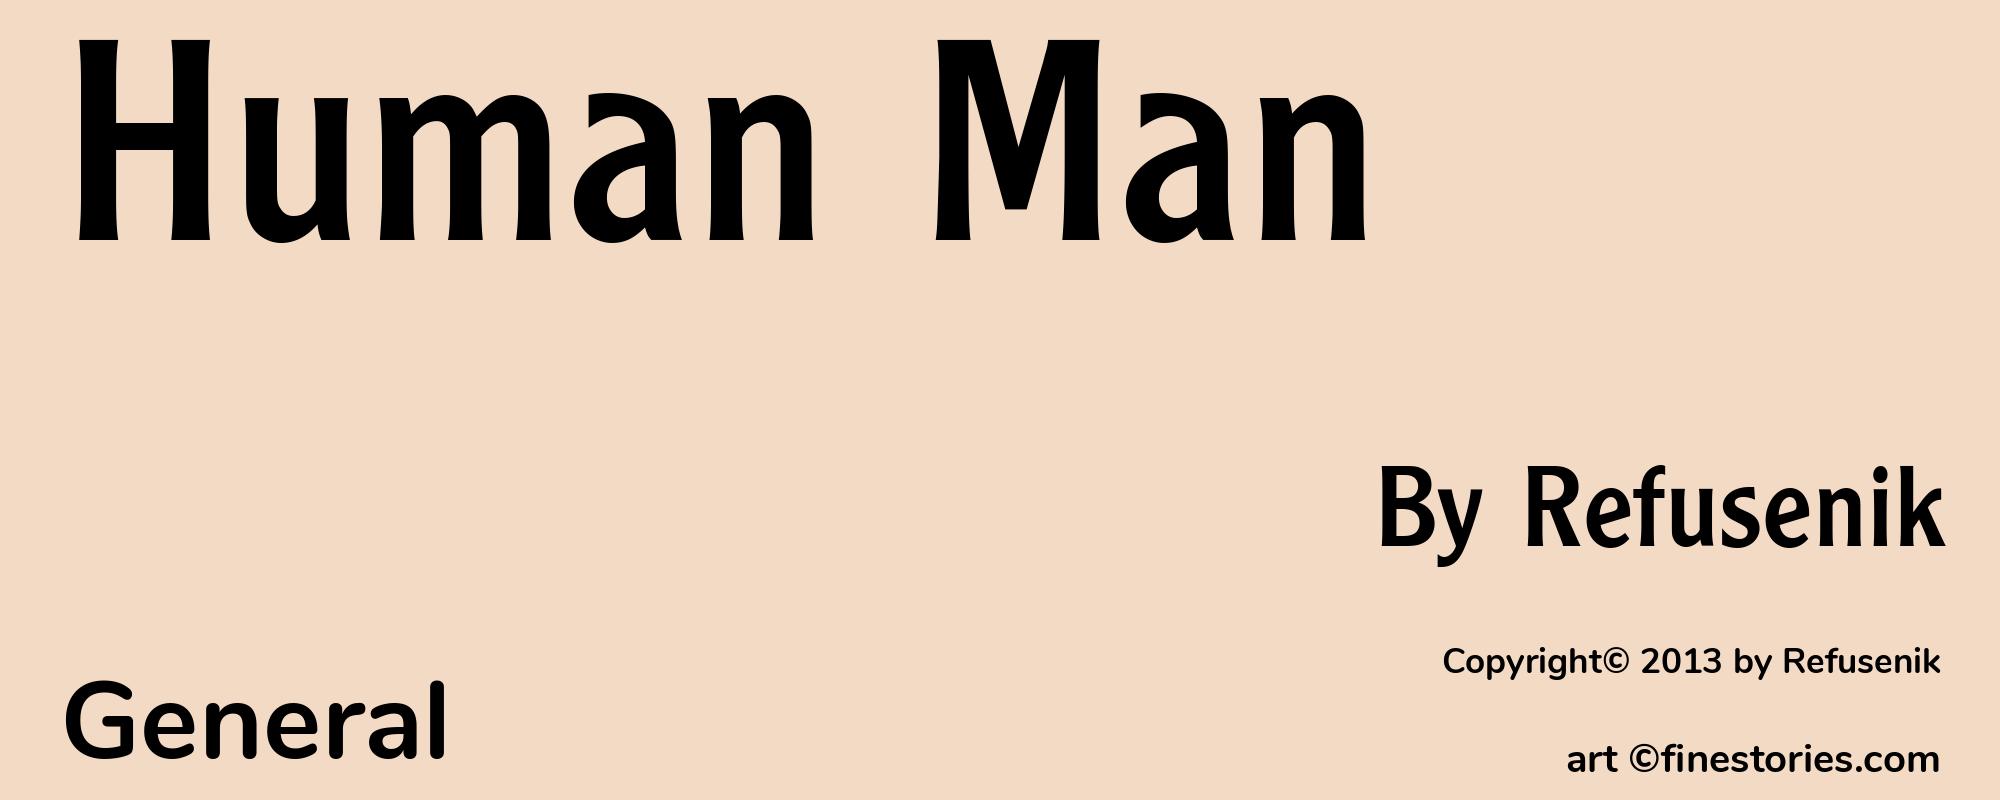 Human Man - Cover